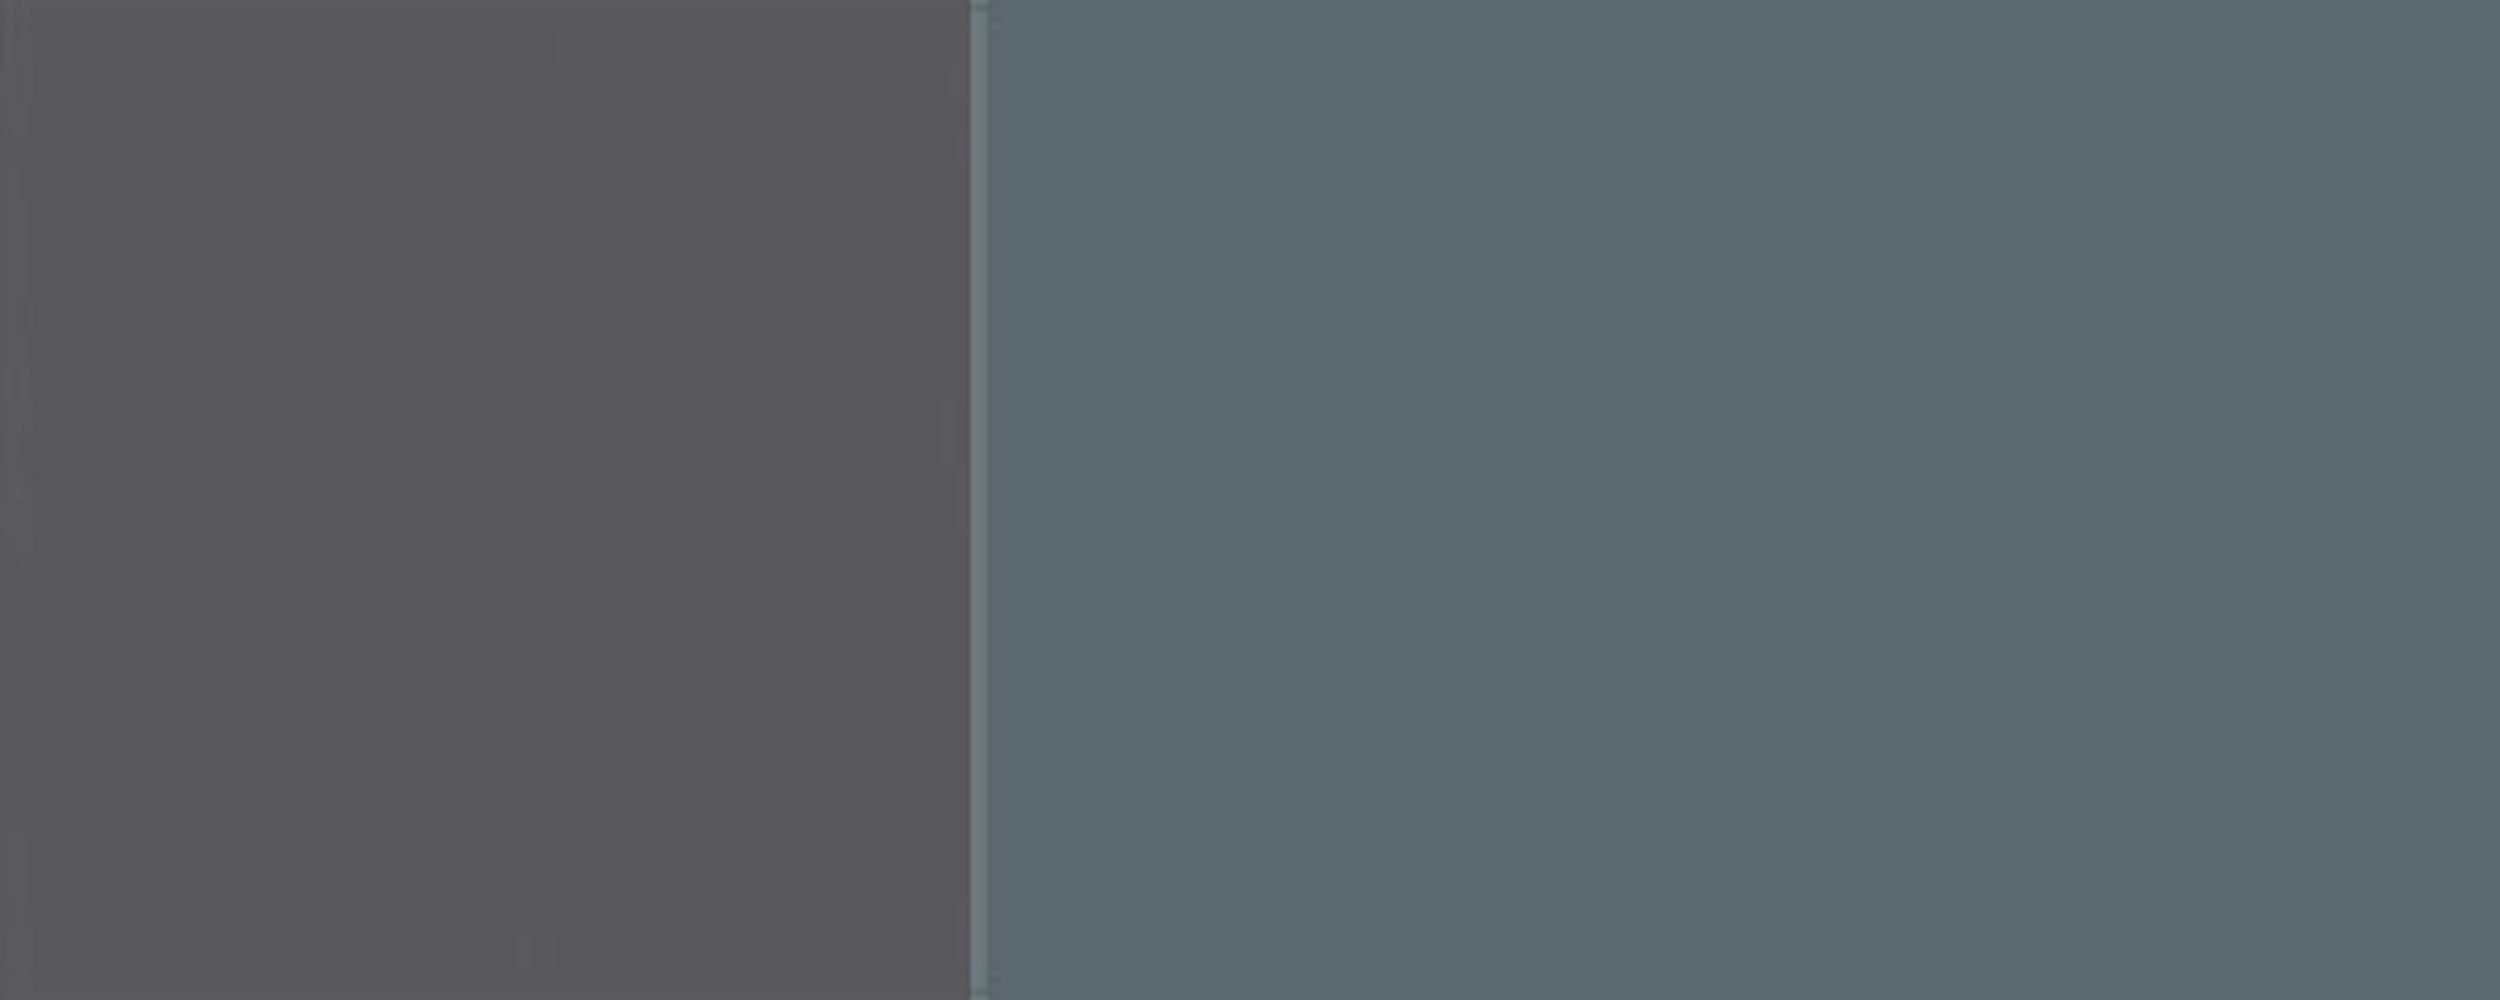 Ausführung grifflos Front-, Schubladen Backofenumbauschrank wählbar Feldmann-Wohnen 7031 Florence blaugrau (Florence) Hochglanz & 60cm 2 Korpusfarbe RAL